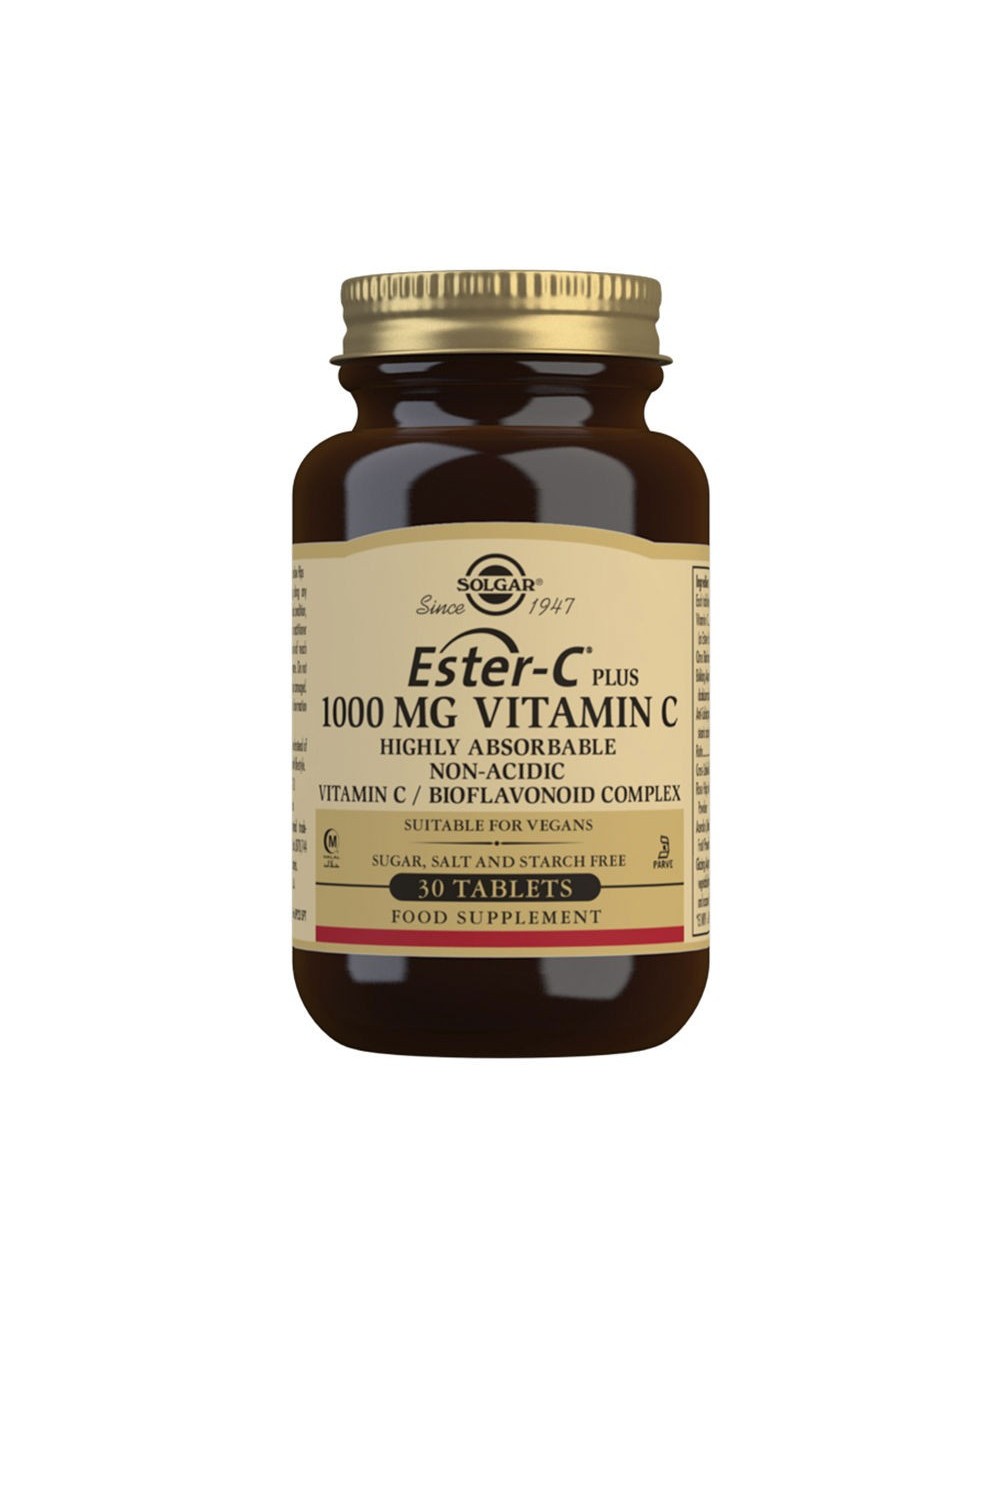 Solgar Ester-C Plus 1000 mg Vitamin C Tablets - Pack of 30